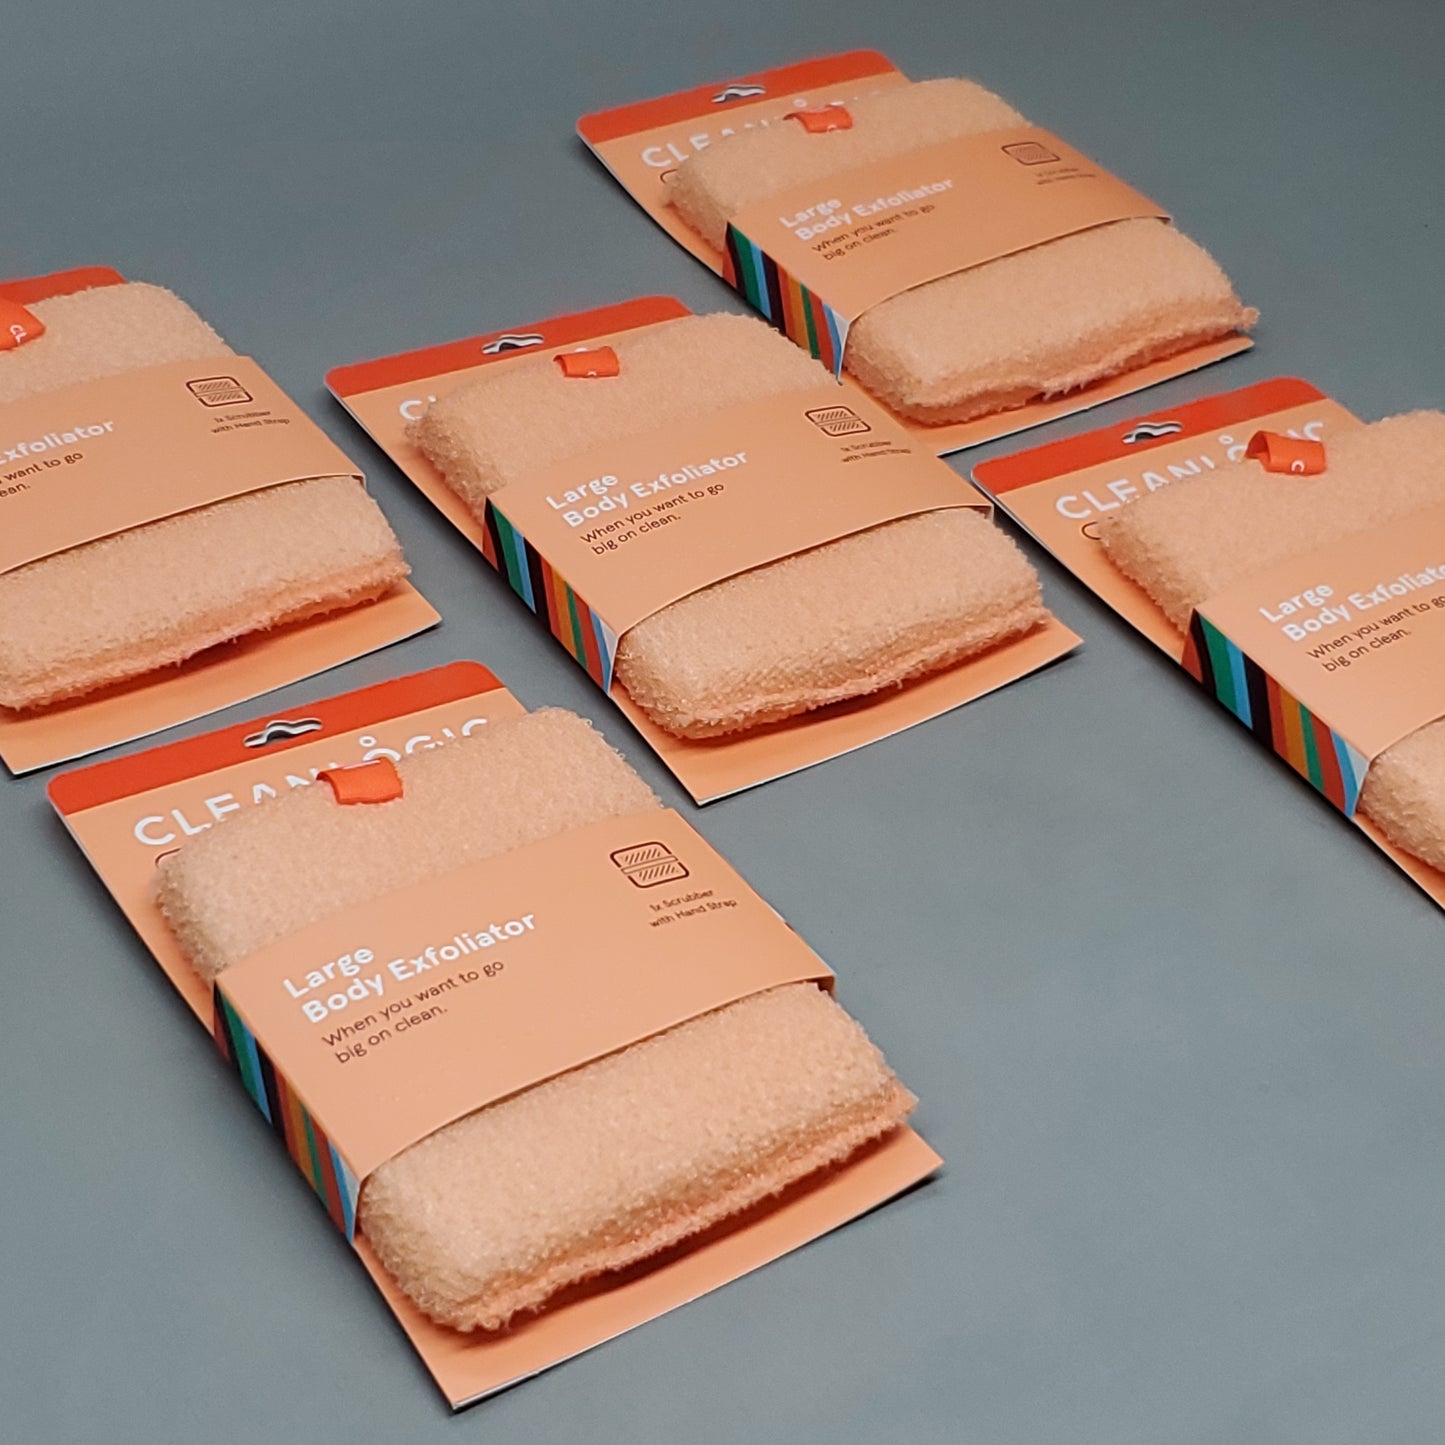 CLEANLOGIC 5 Pack of Large Body Exfoliator Scrubber 4.53"X6.1"X0.87" Orange (New)